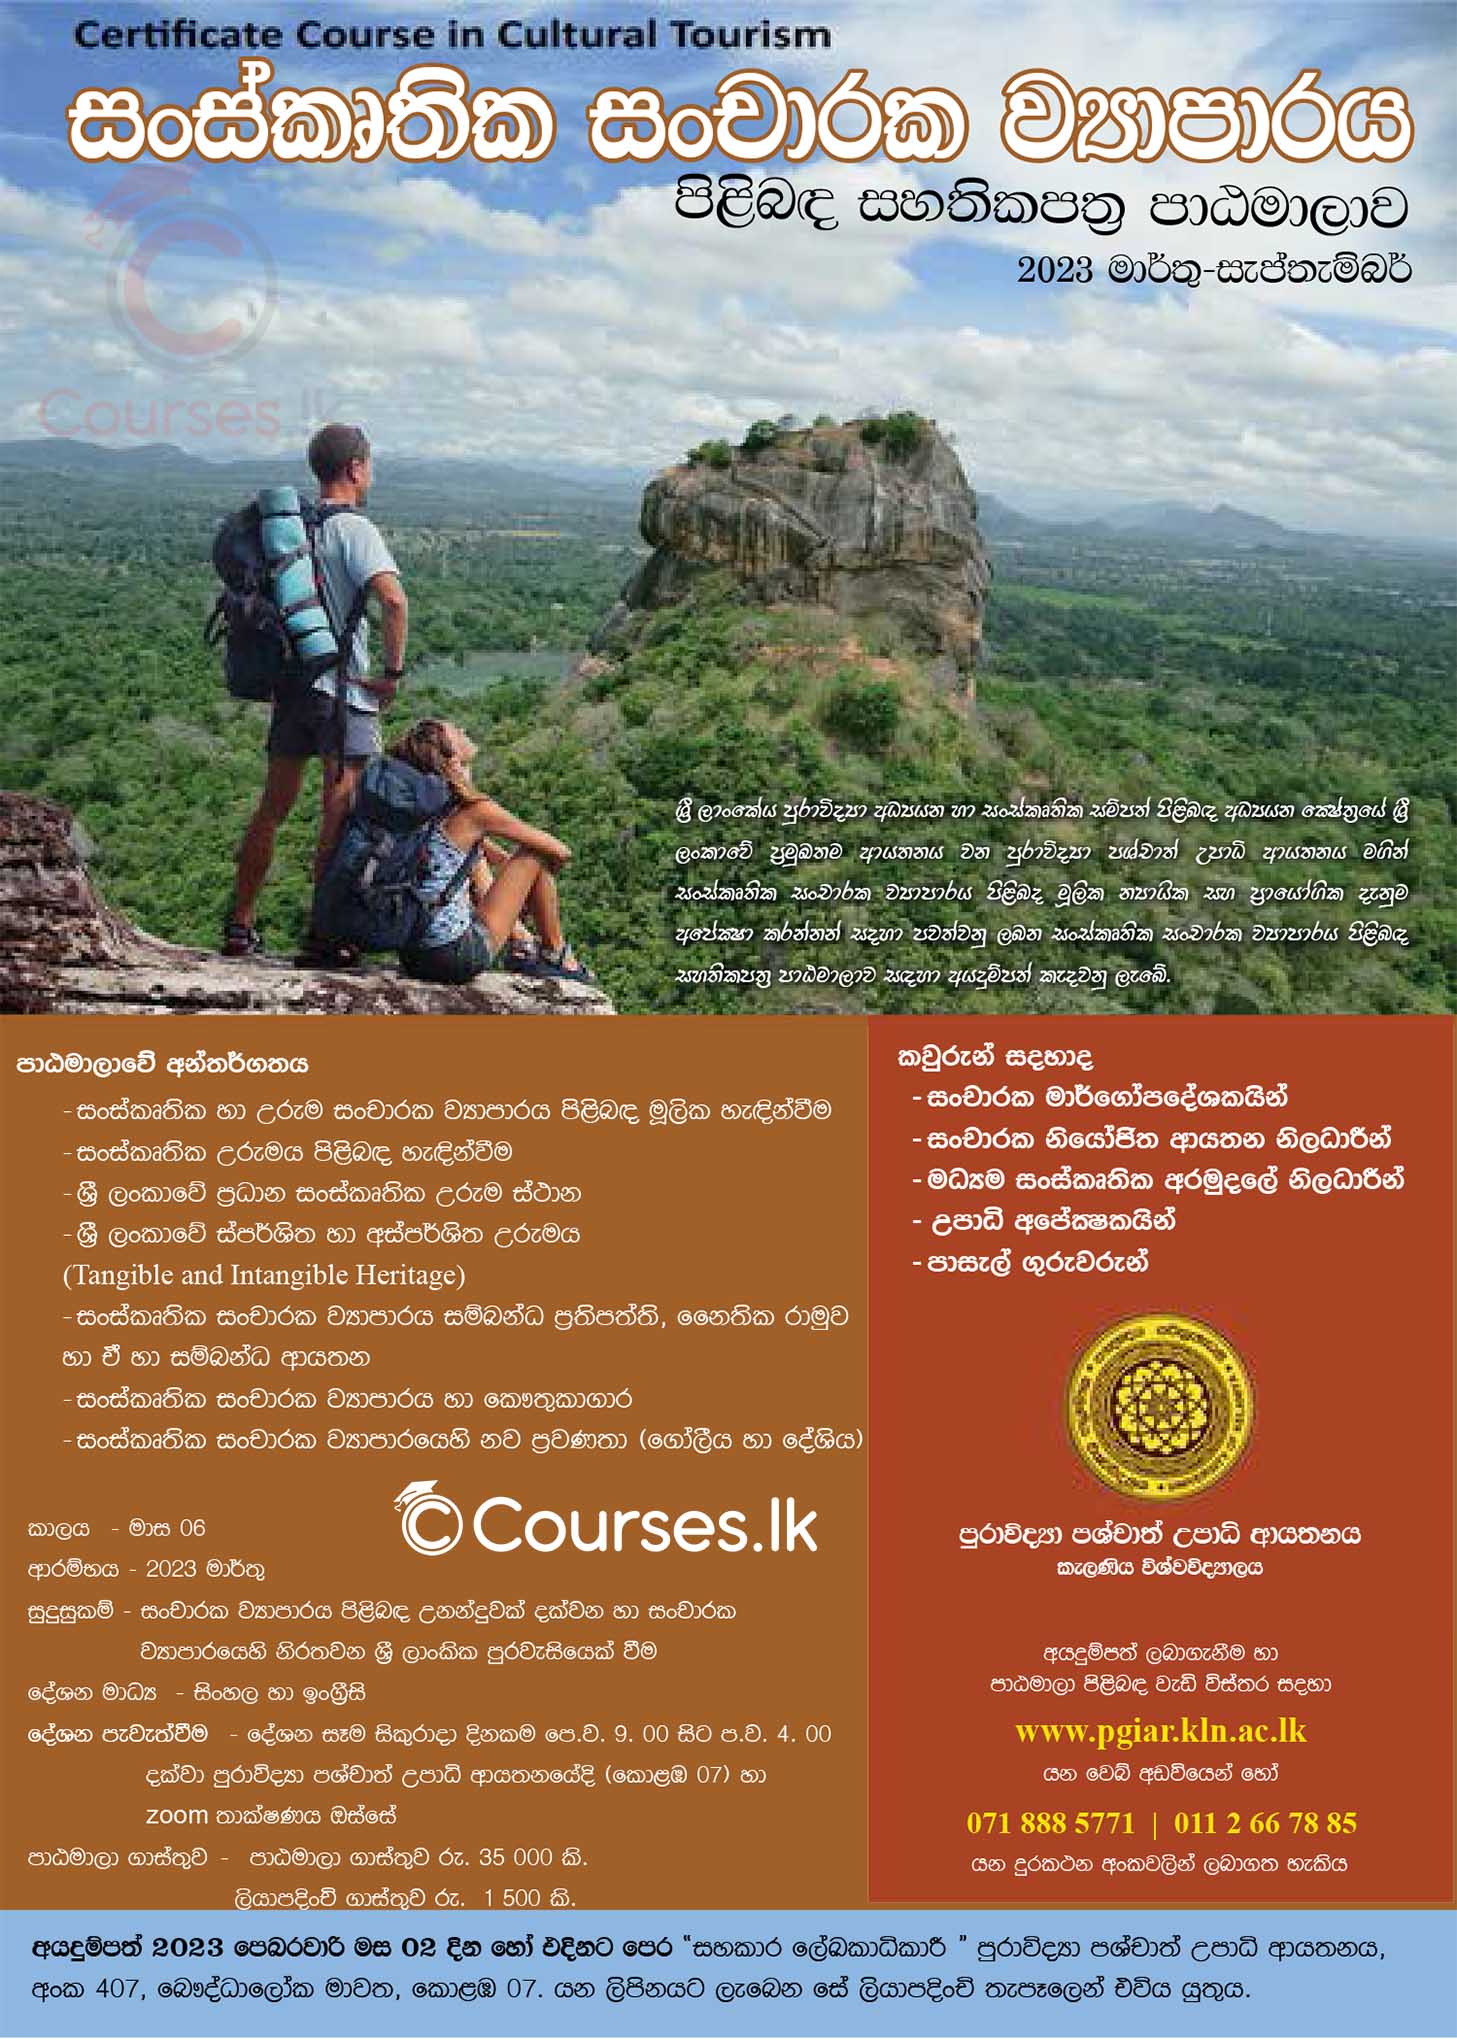 Certificate Course in Cultural Tourism 2023 - University of Kelaniya